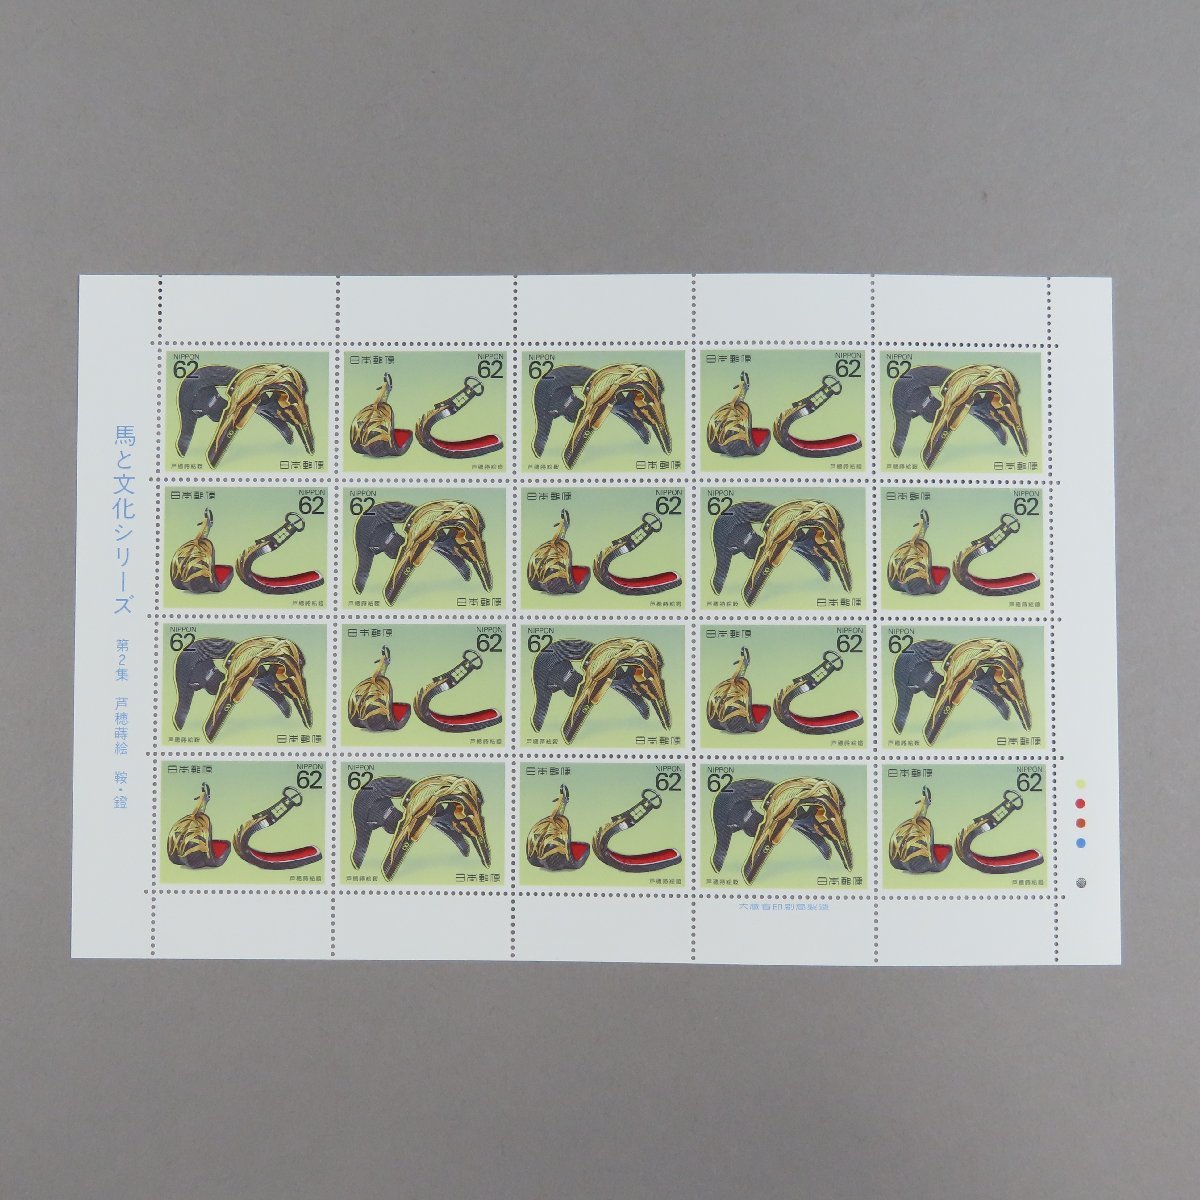 [ stamp 1102] Uma to Bunka series no. 2 compilation .. lacqering saddle * stirrups / horse 62 jpy 20 surface 2 seat postal . instructions manual pamphlet attaching 